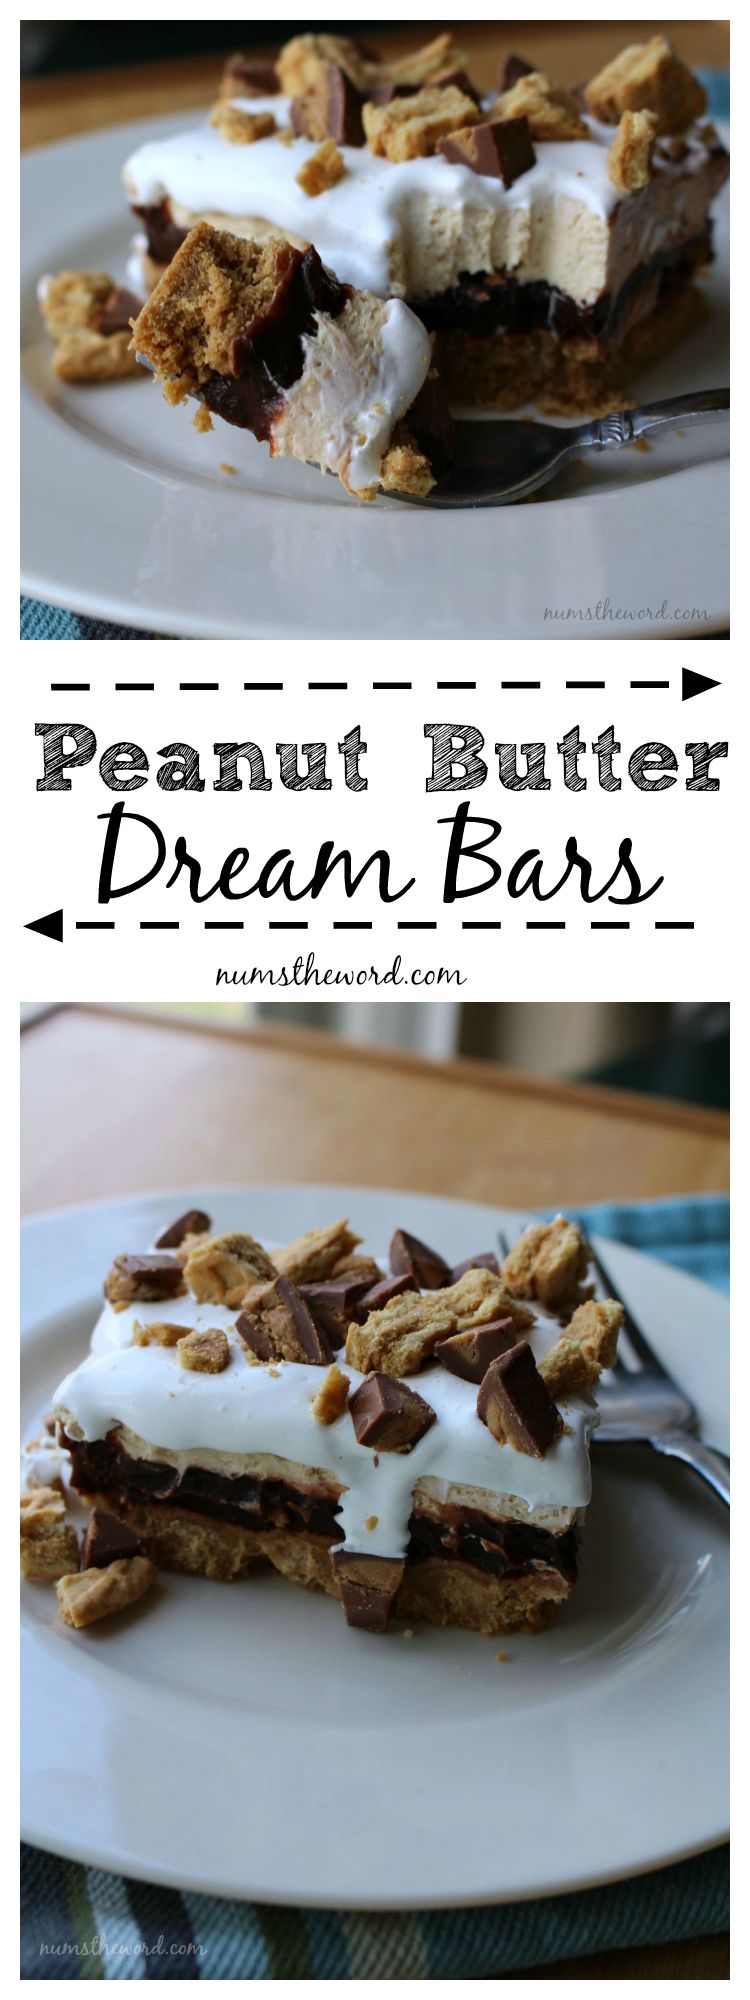 Peanut Butter Dream Bars